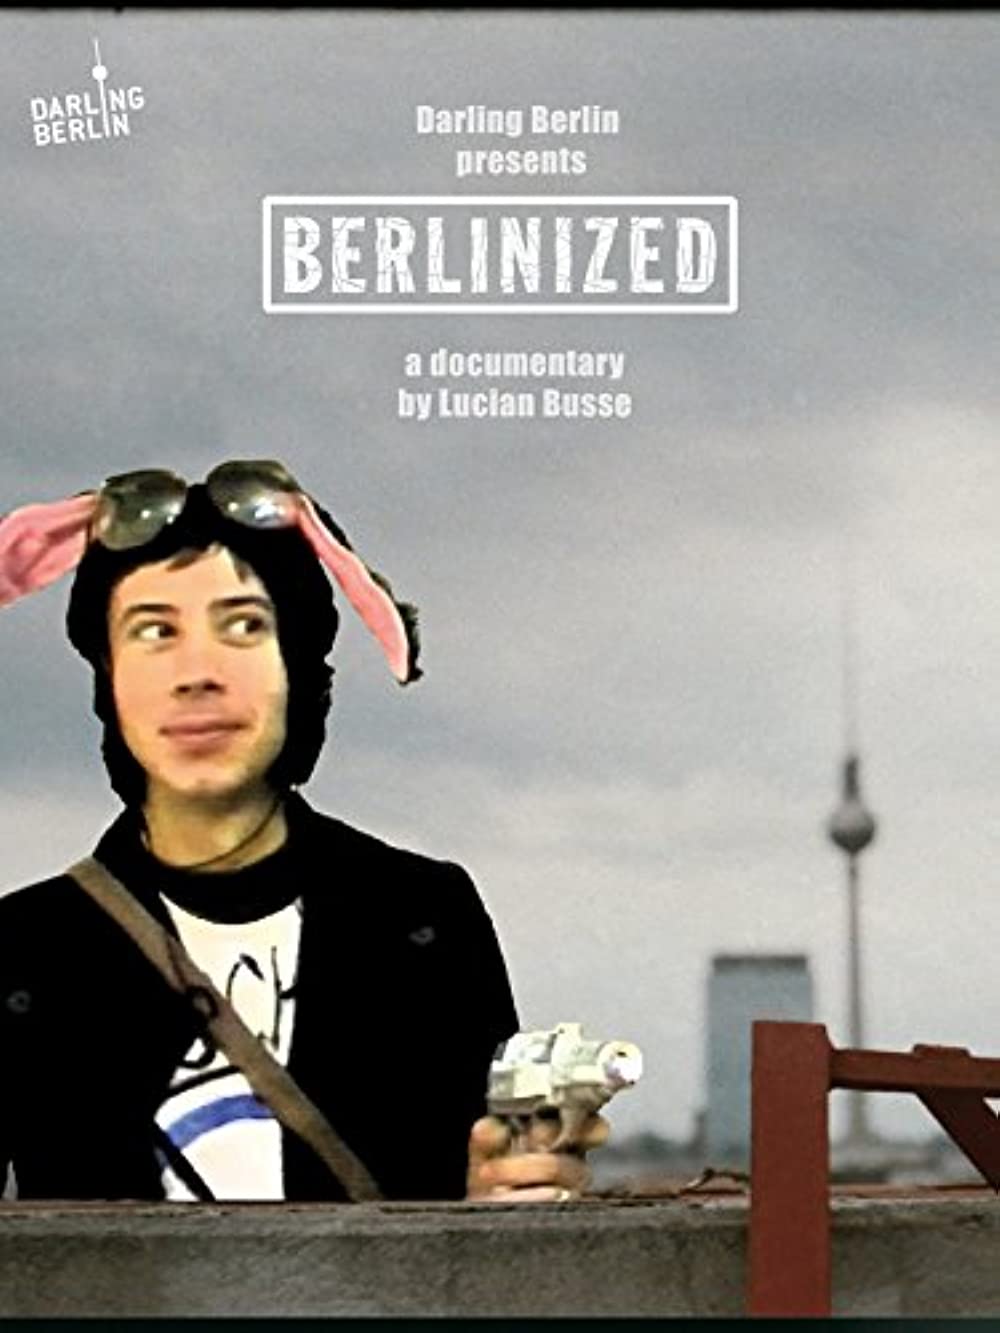 Filmbeschreibung zu Berlinized - Sexy an Eis